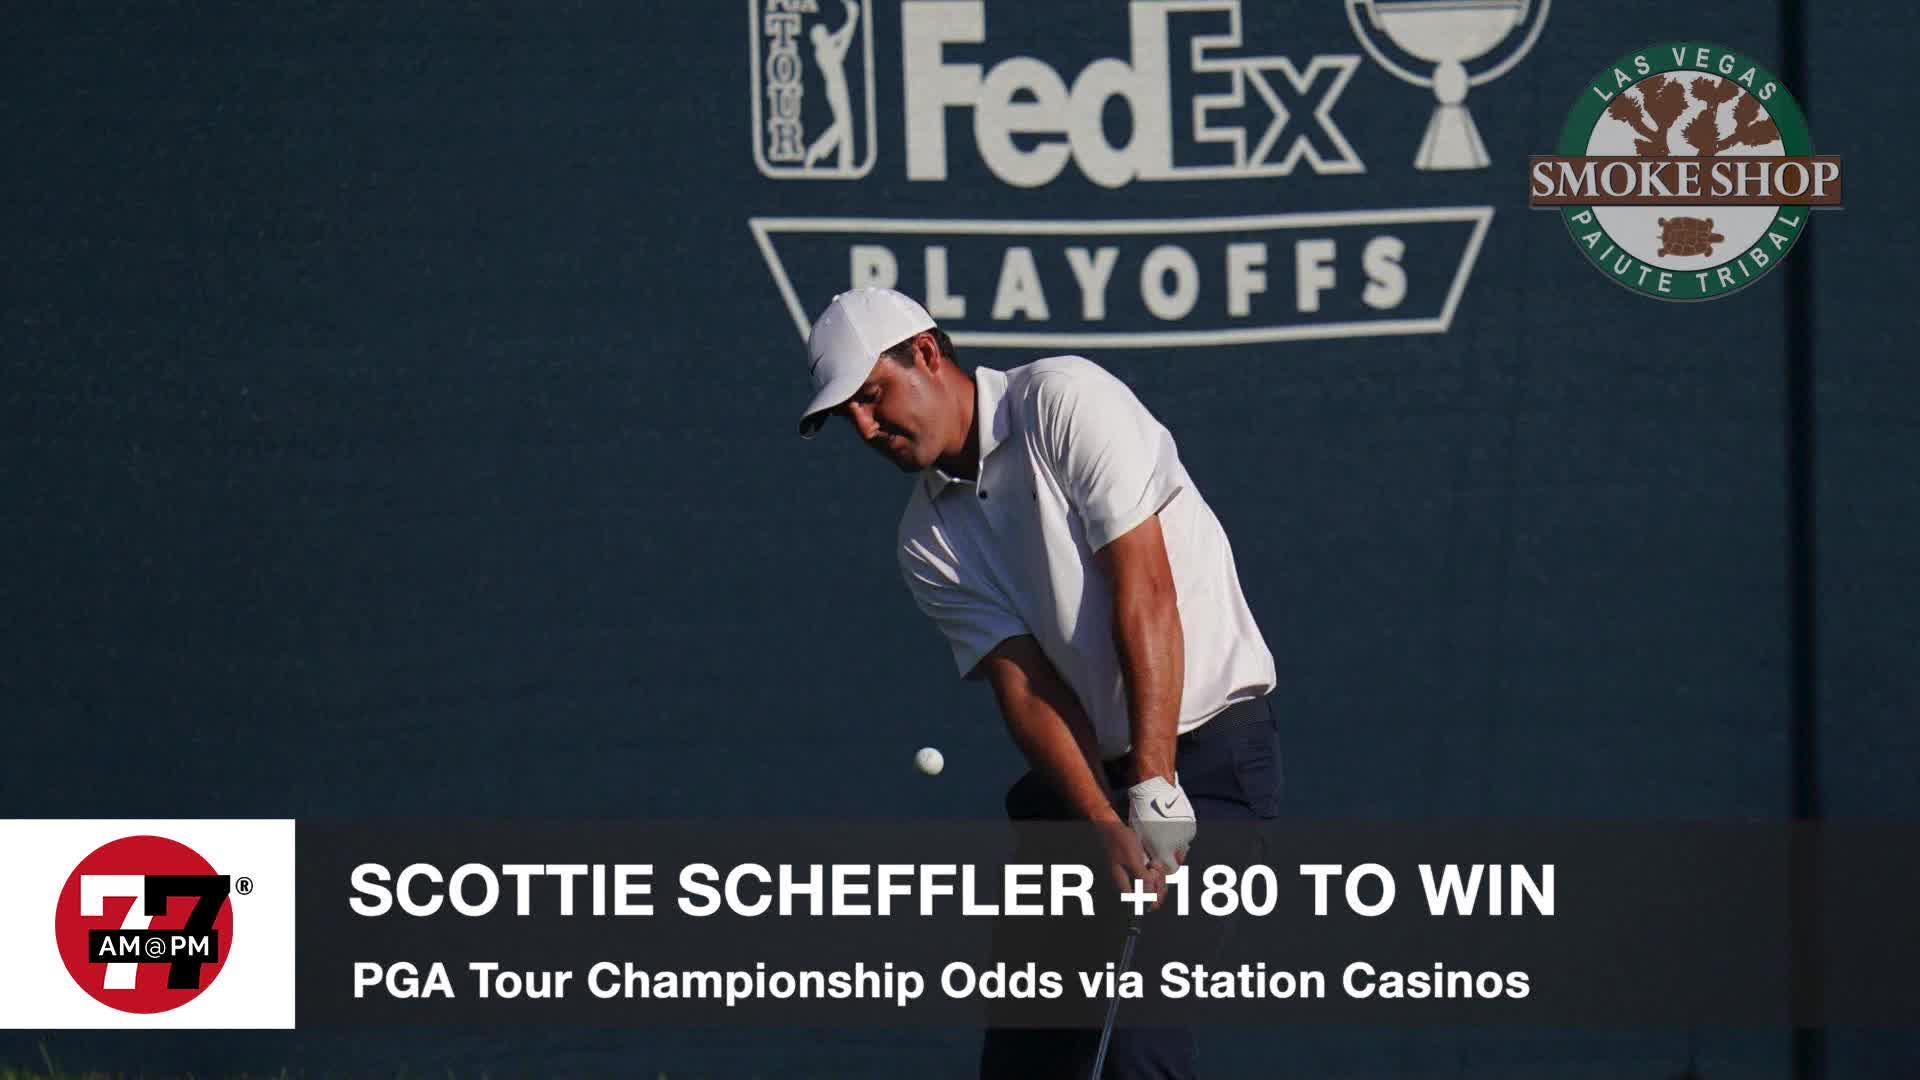 Scottie Scheffler plus 180 to win PGA Tour Championship